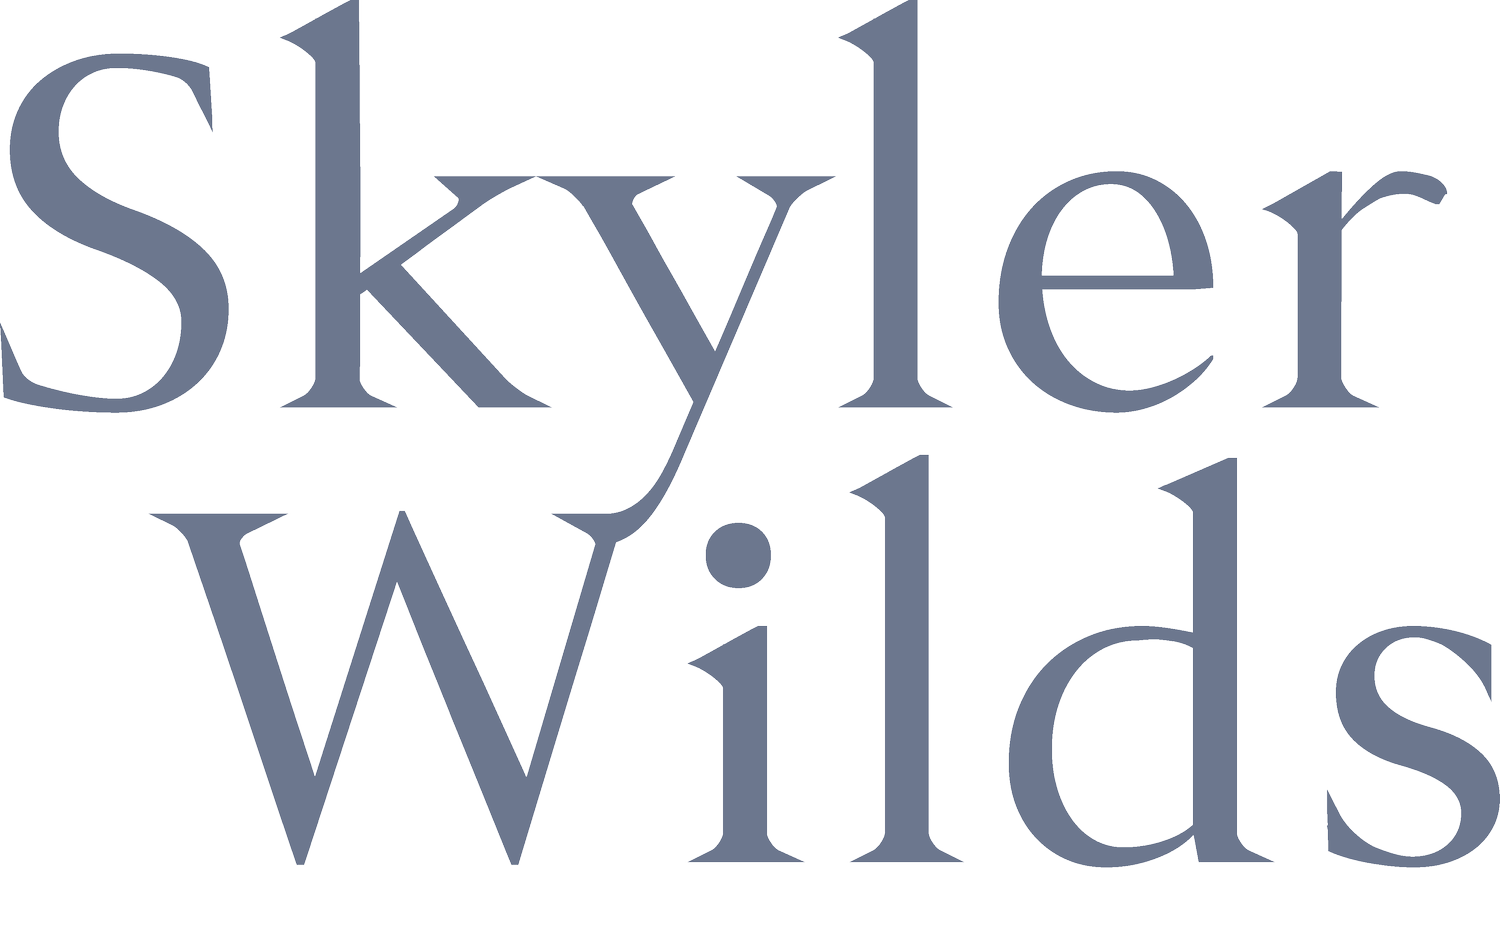 Skyler Wilds